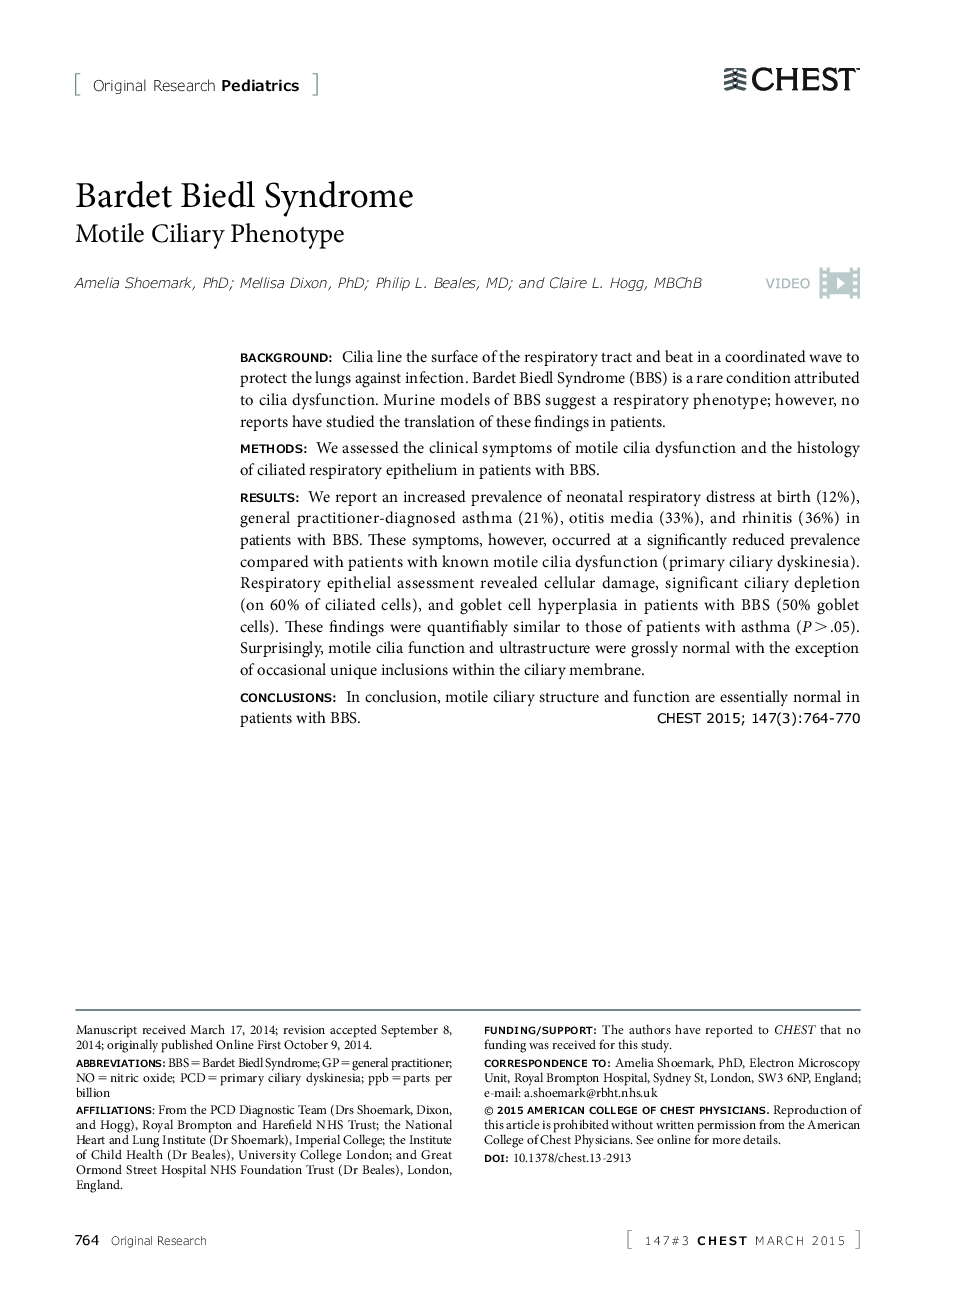 سندرم Bardet Biedl: فنوتیپ حرکتی سیلاری